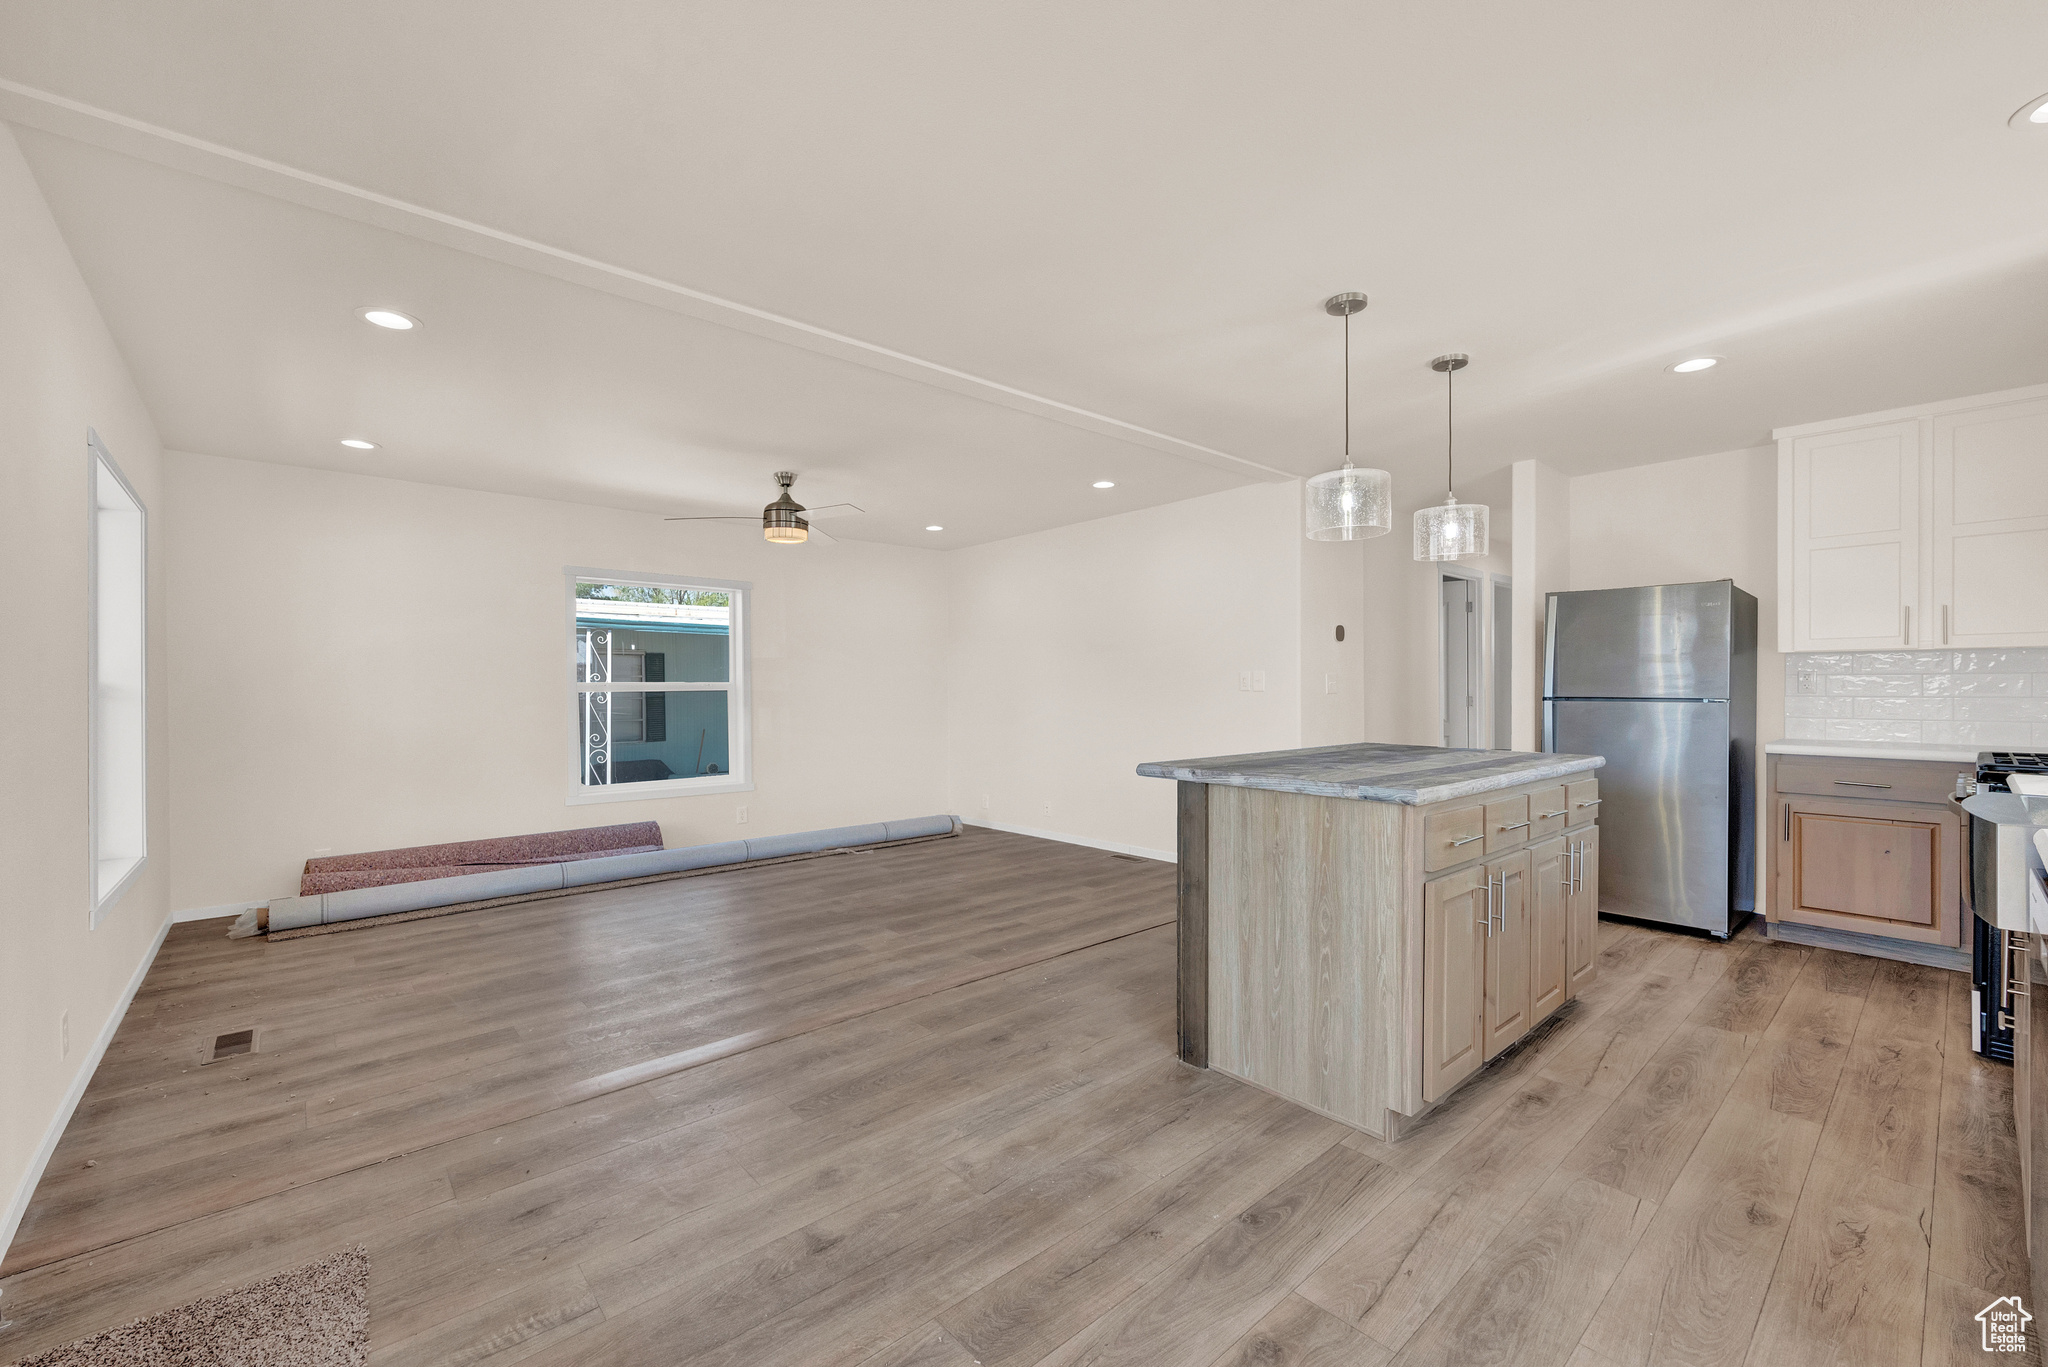 Kitchen featuring stainless steel refrigerator, a kitchen island, tasteful backsplash, light hardwood / wood-style floors, and ceiling fan